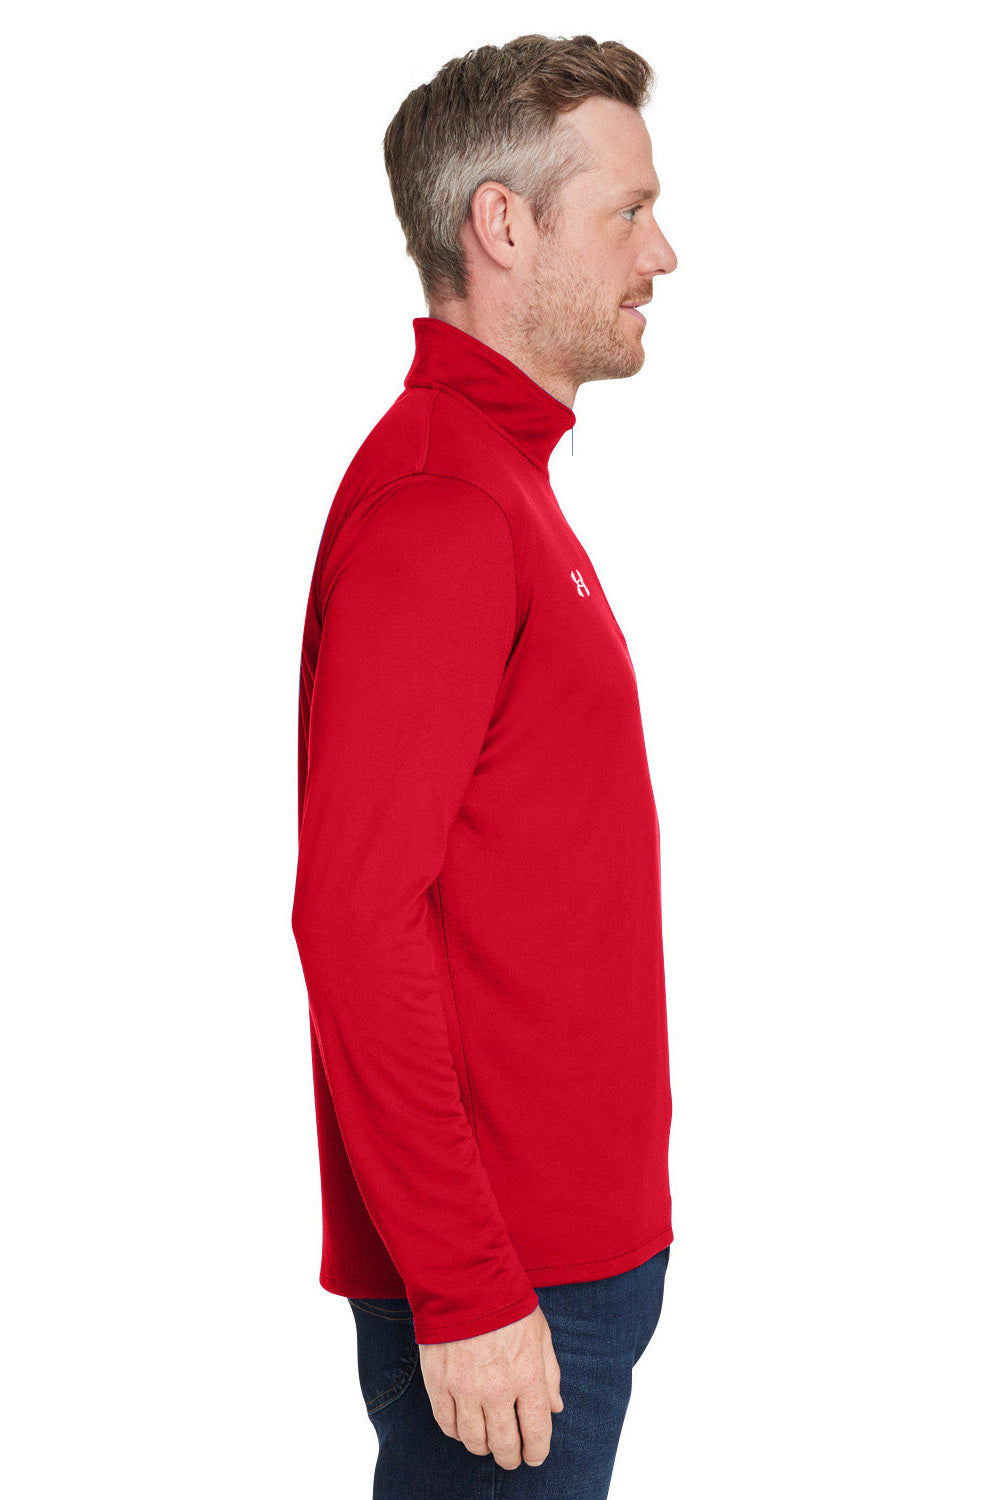 Under Armour 1376844 Mens Team Tech Moisture Wicking 1/4 Zip Sweatshirt Red Model Side